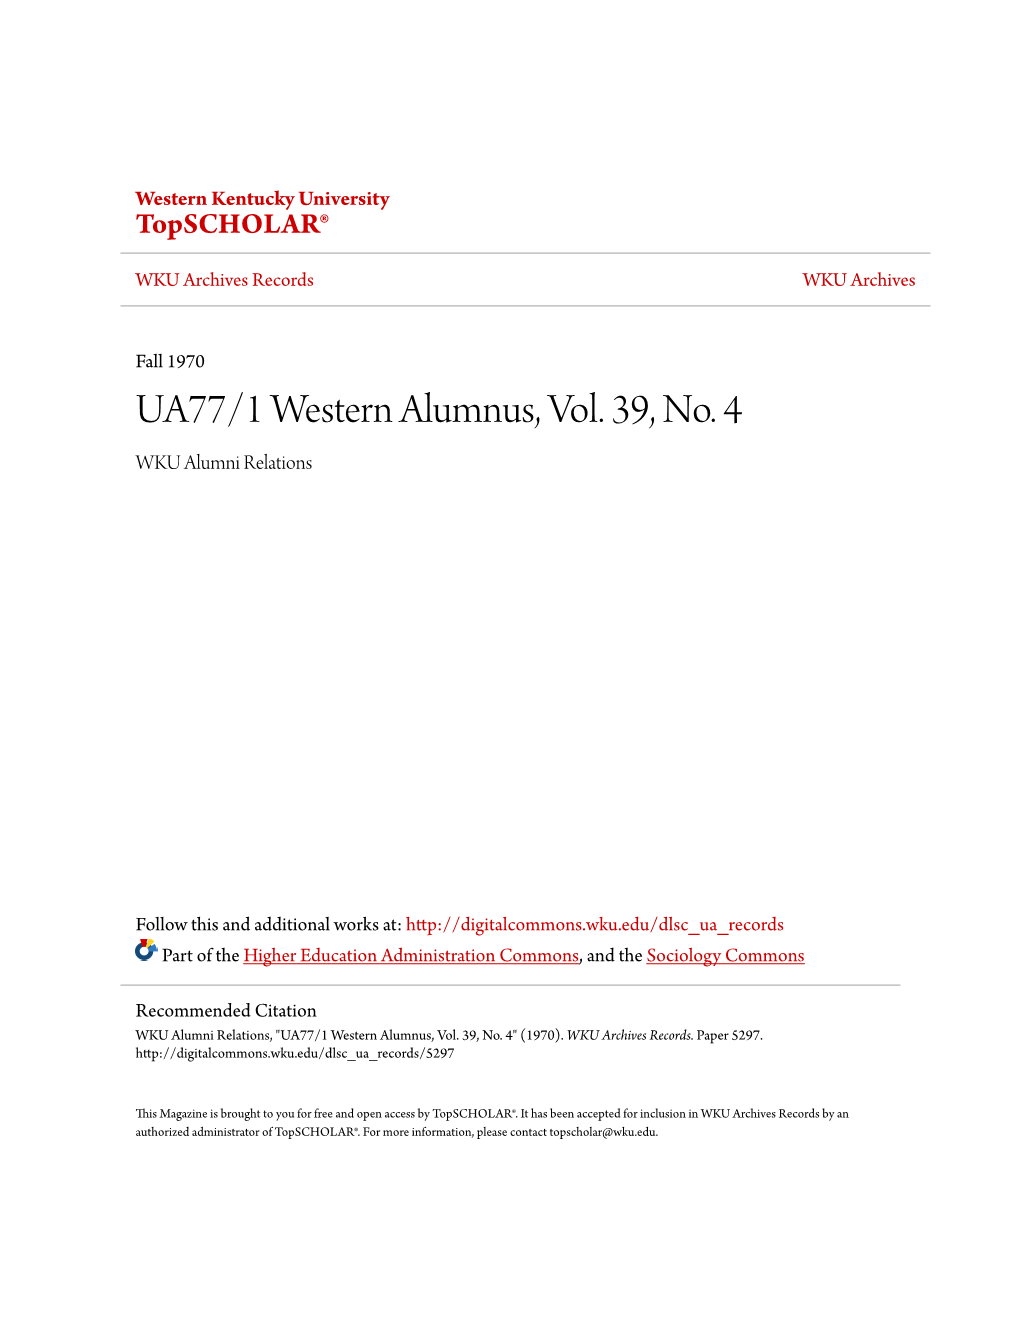 UA77/1 Western Alumnus, Vol. 39, No. 4 WKU Alumni Relations